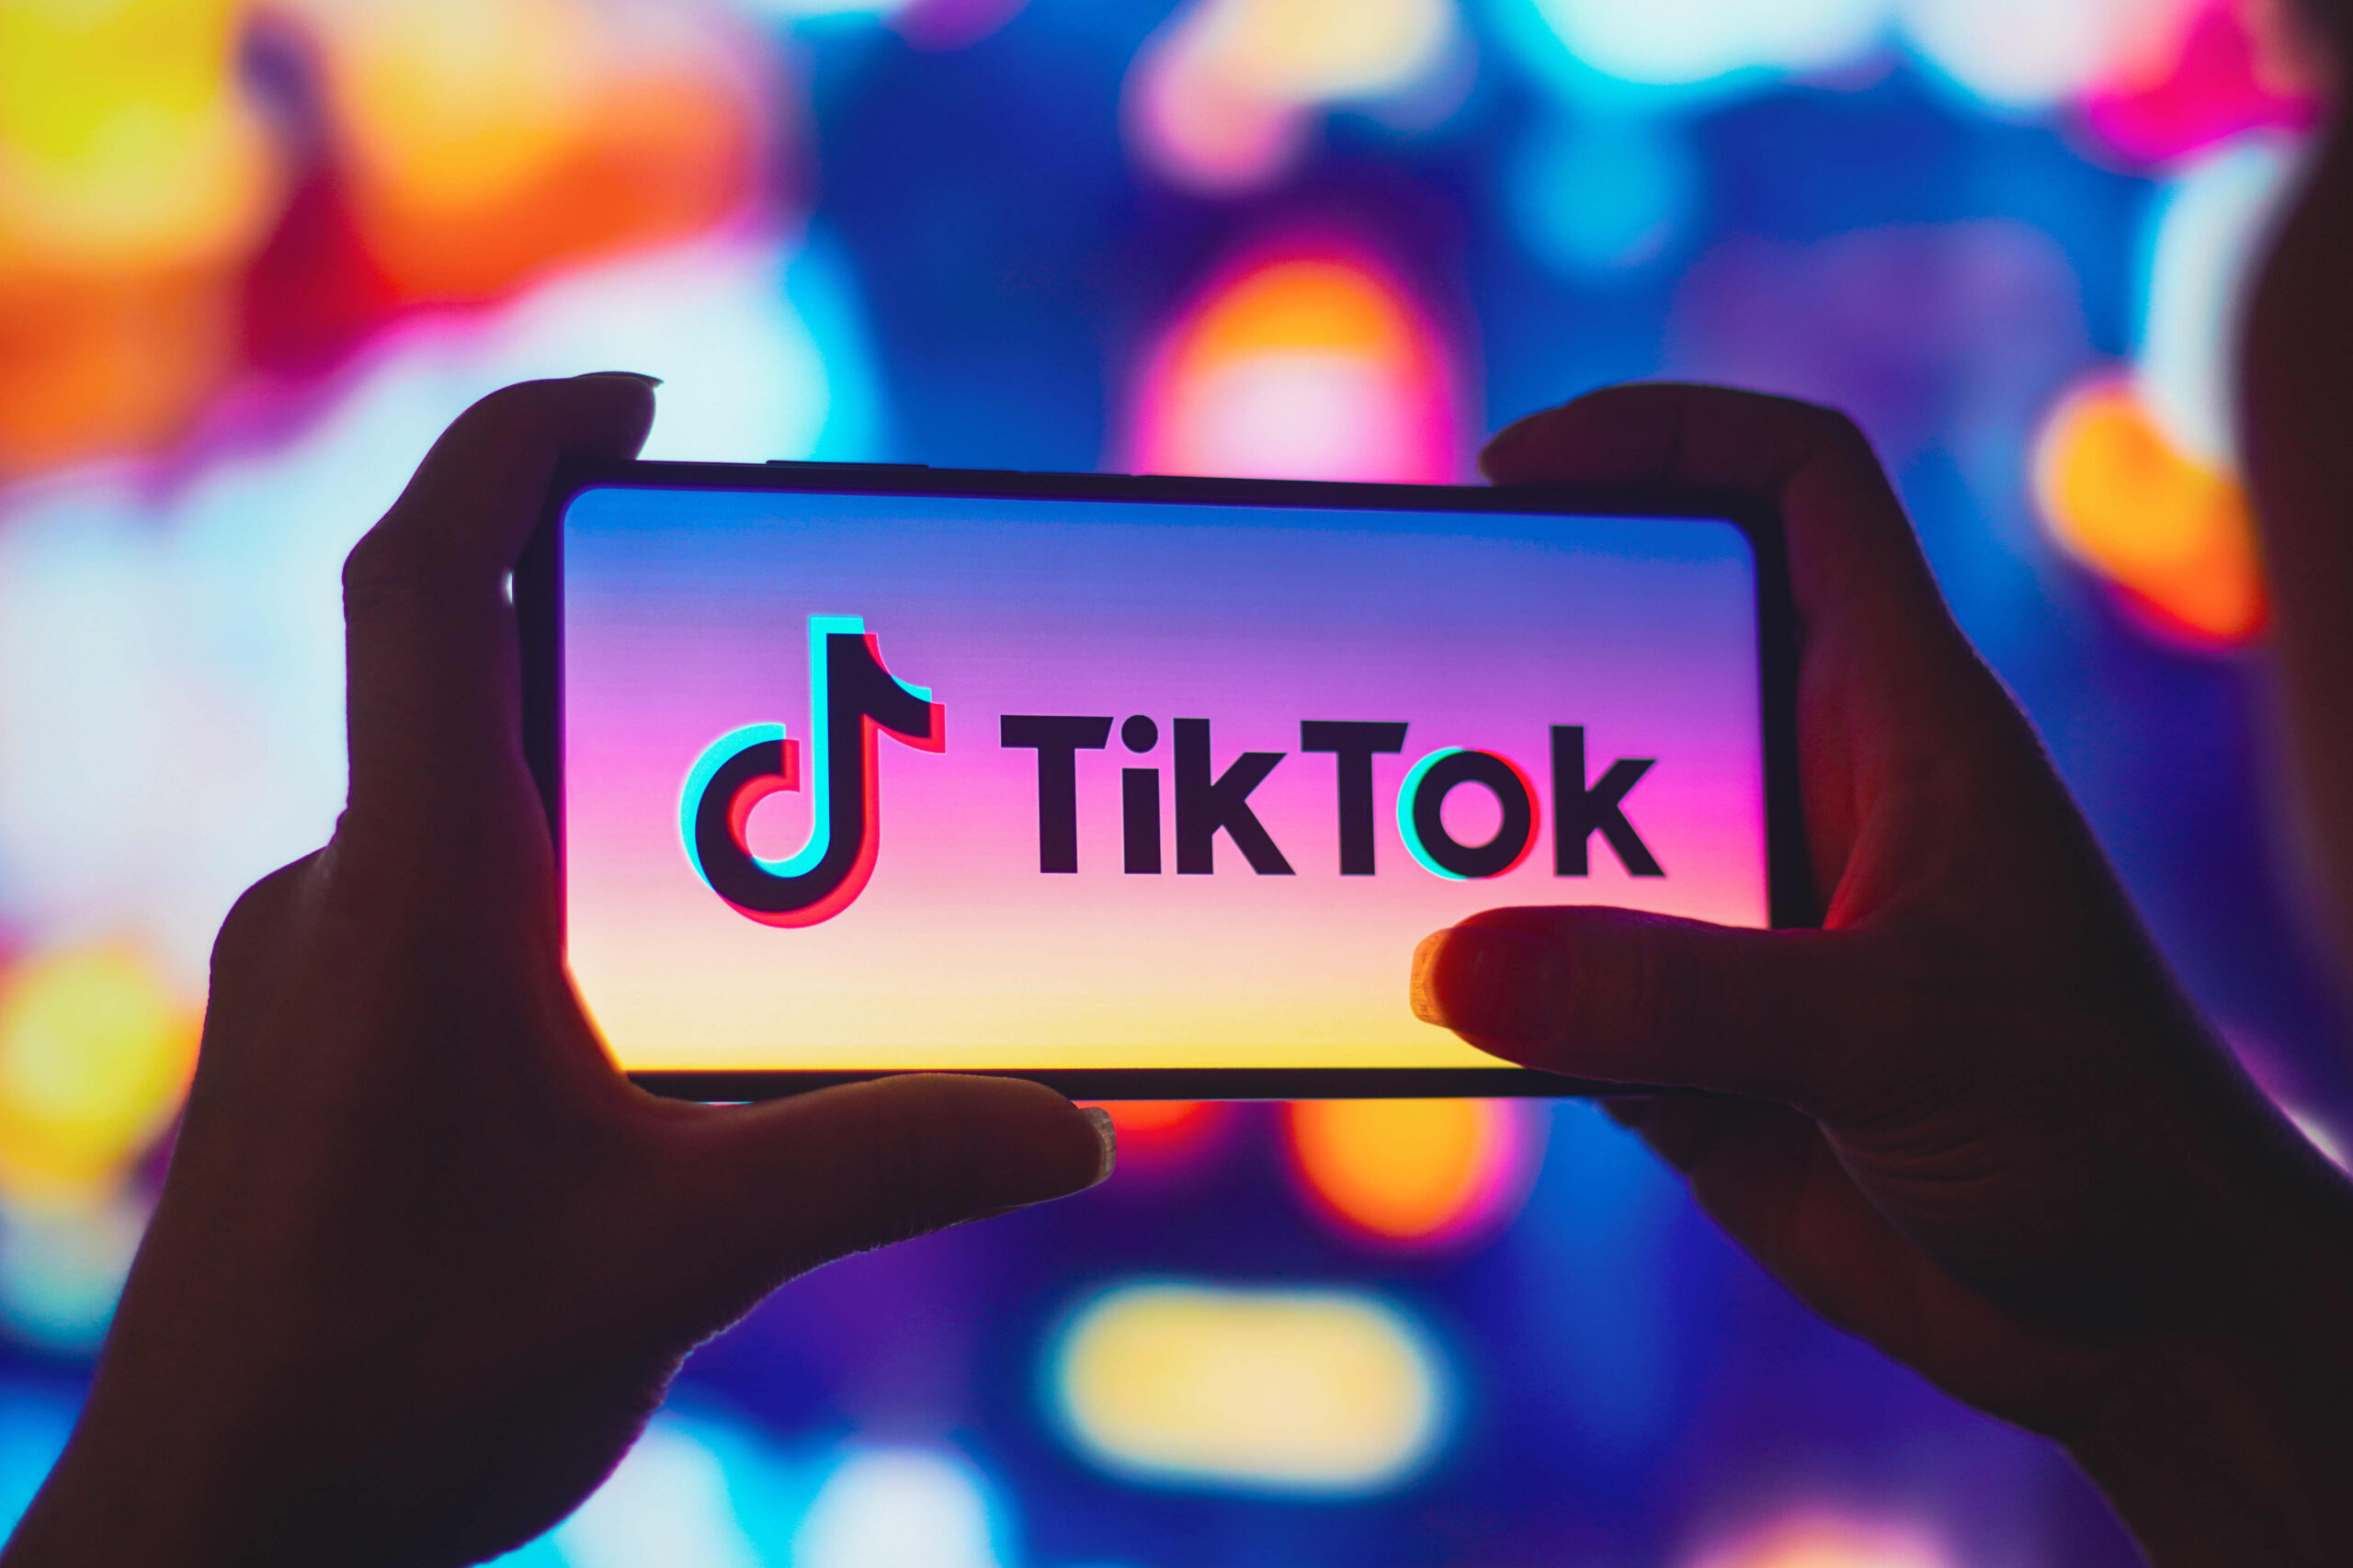 How to get paid on TikTok